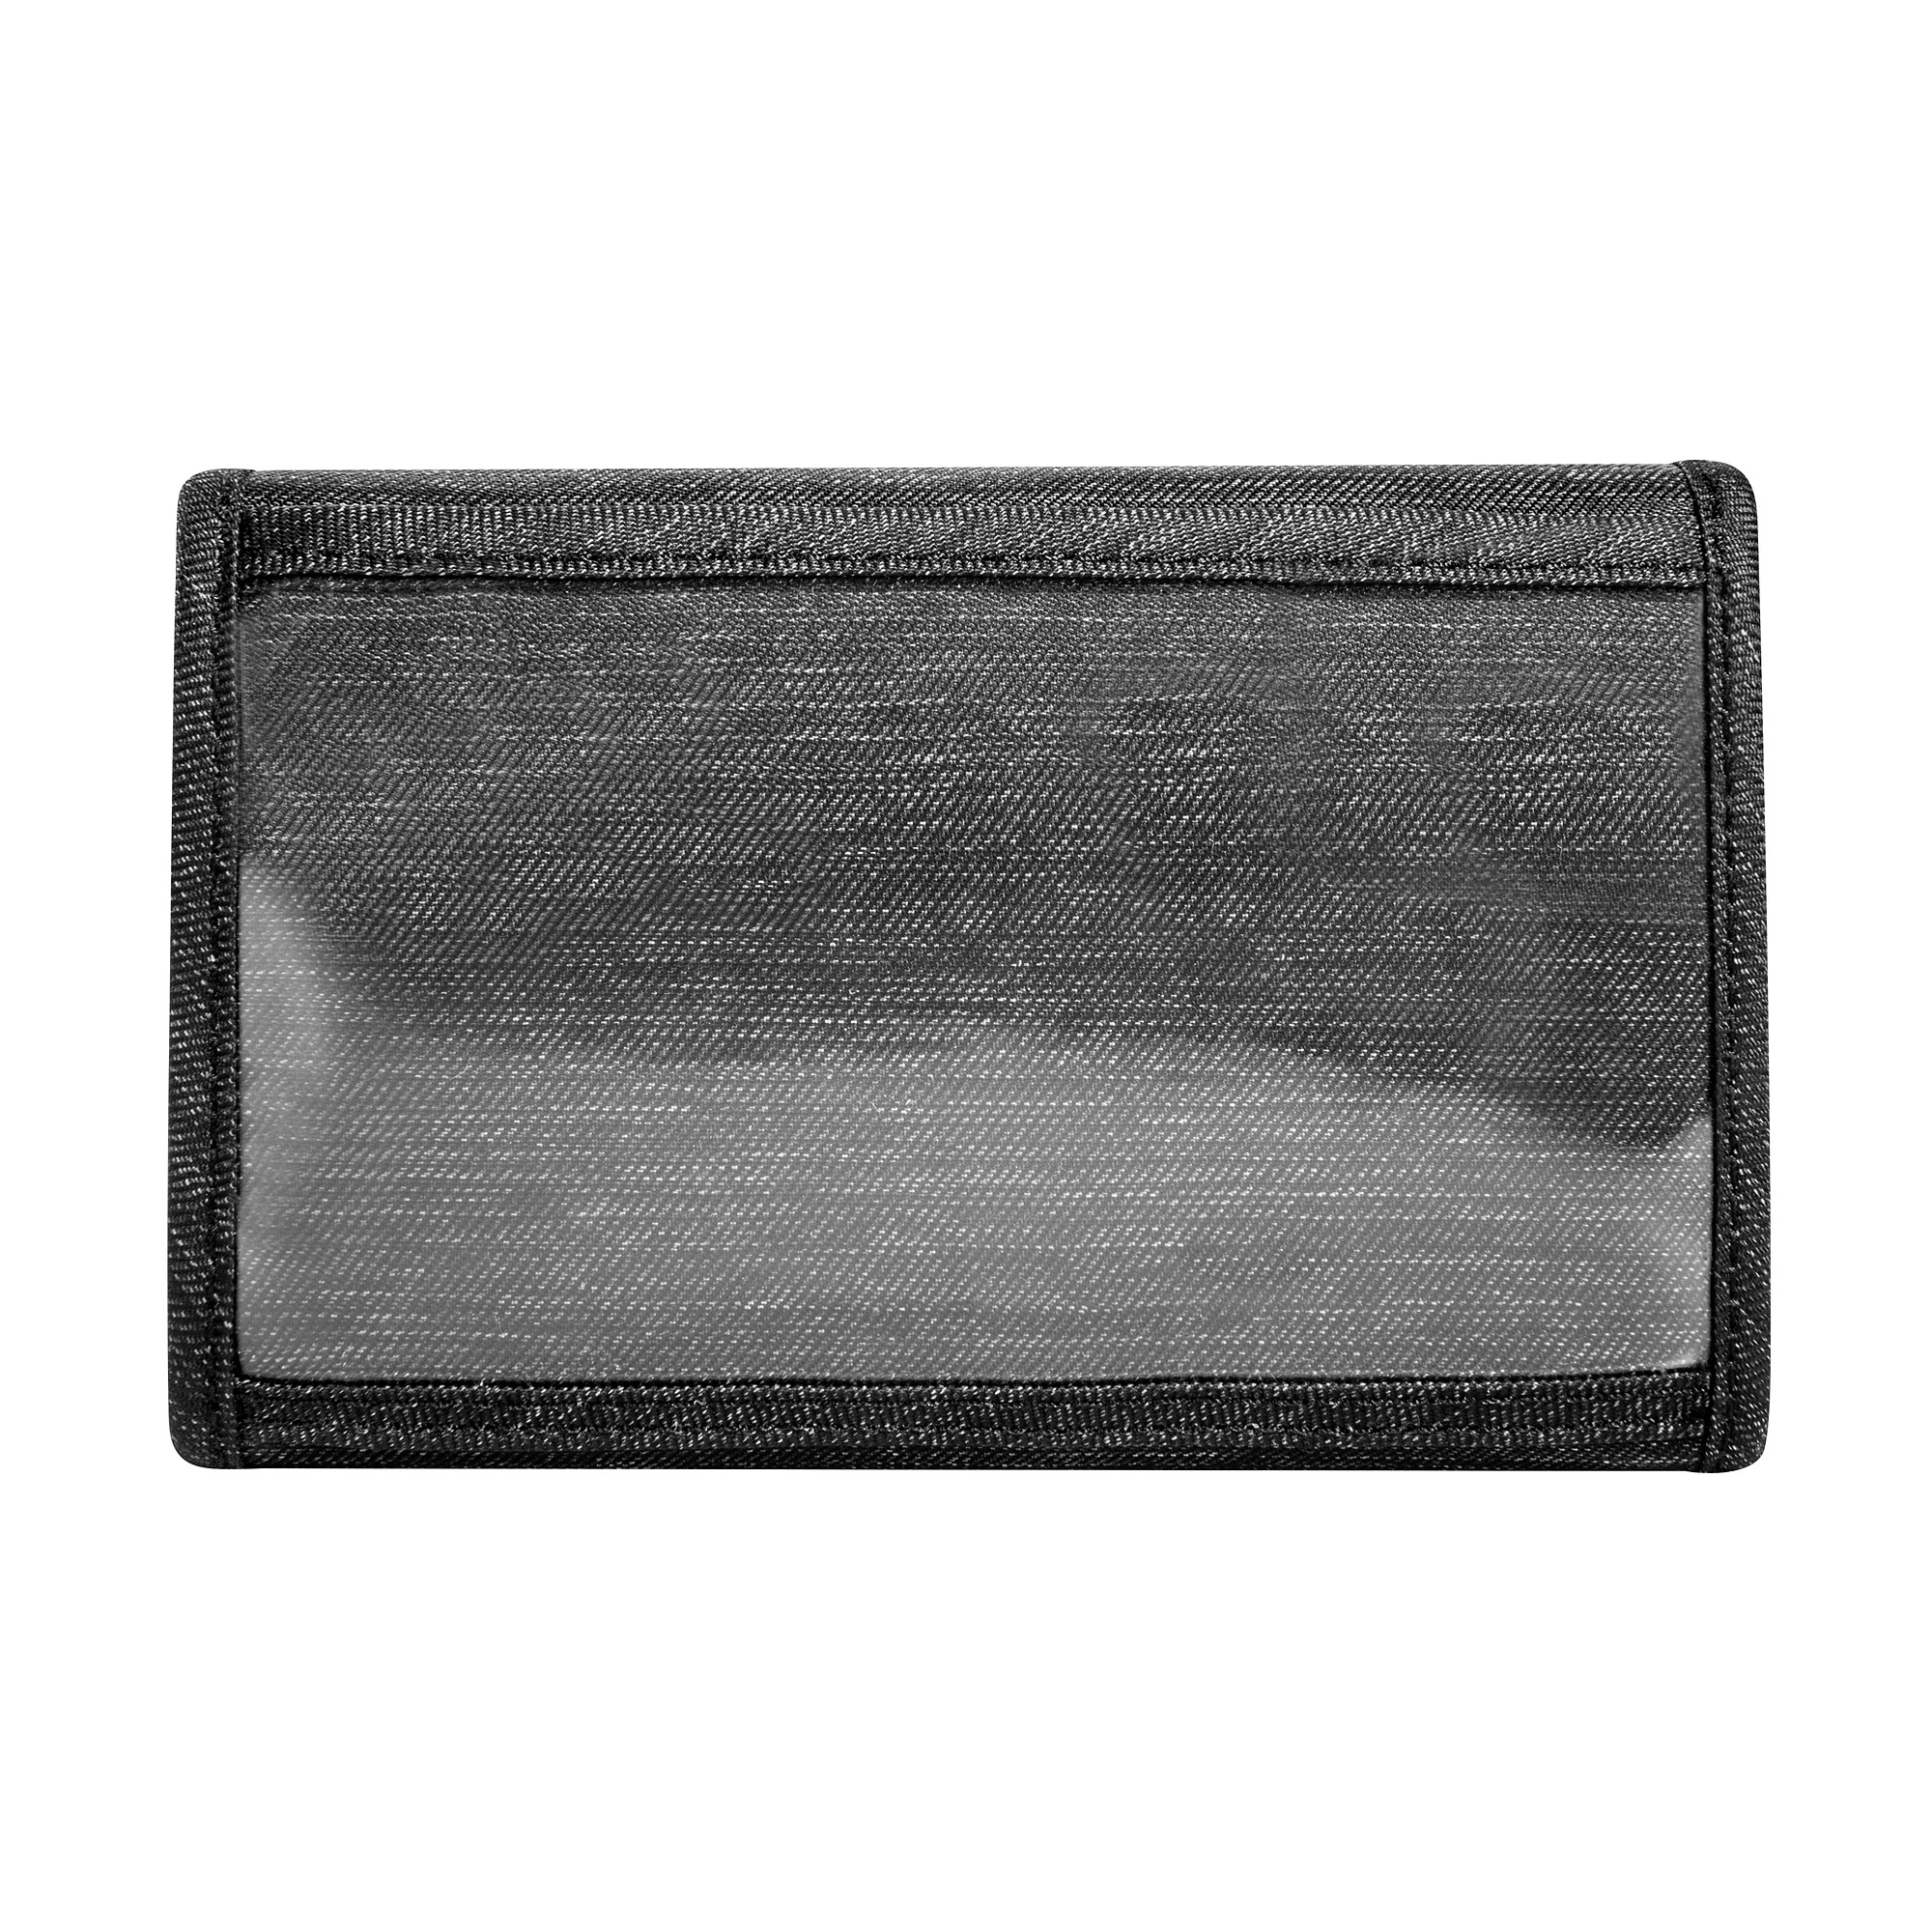 Tatonka ID Wallet off black schwarz Geldbeutel 4013236336191